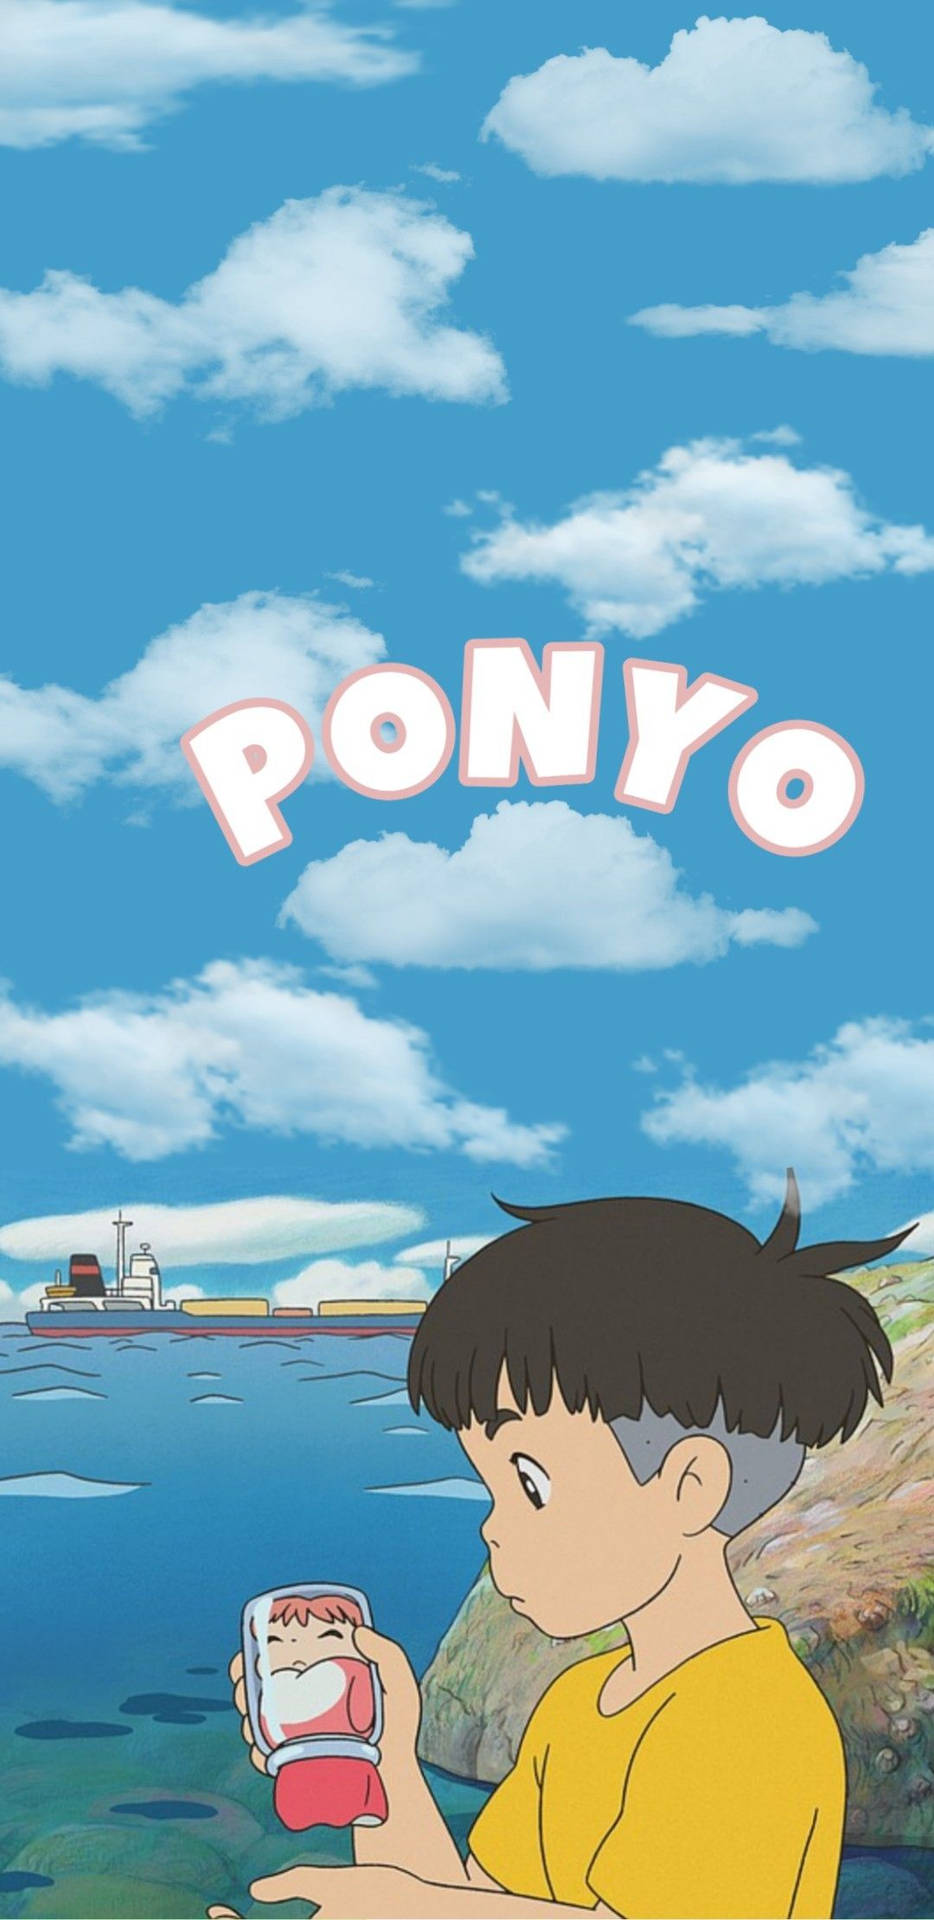 Ponyo In A Glass Background